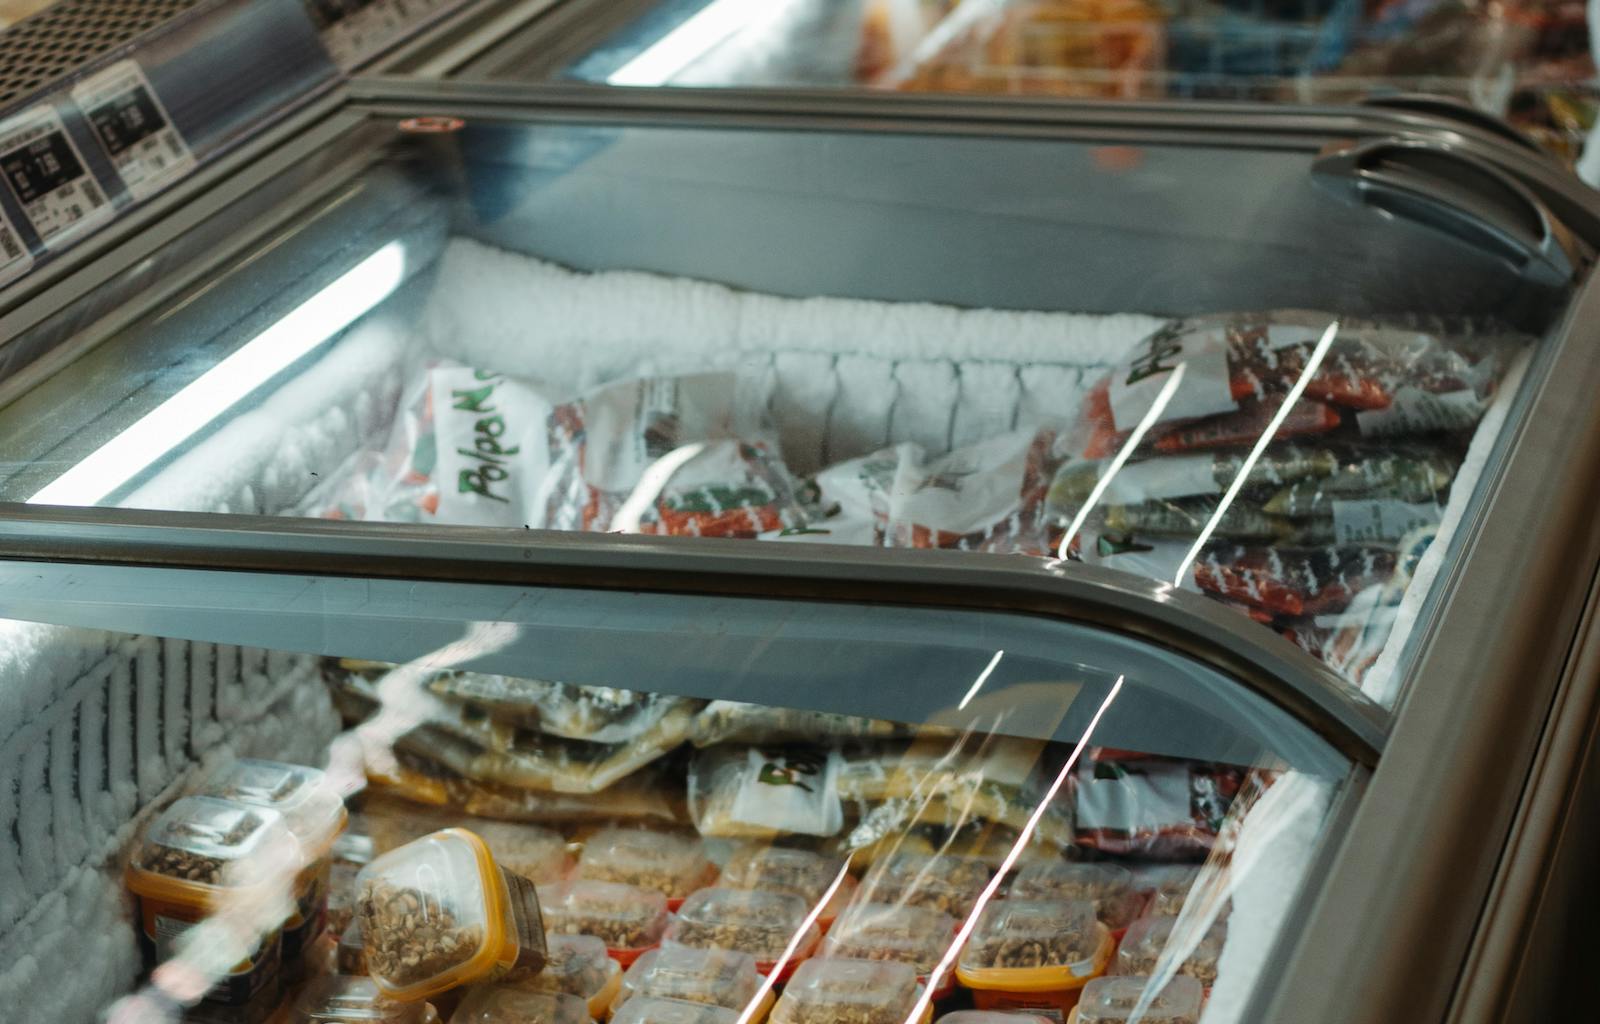 Frozen food FMCGs in a grocery store.